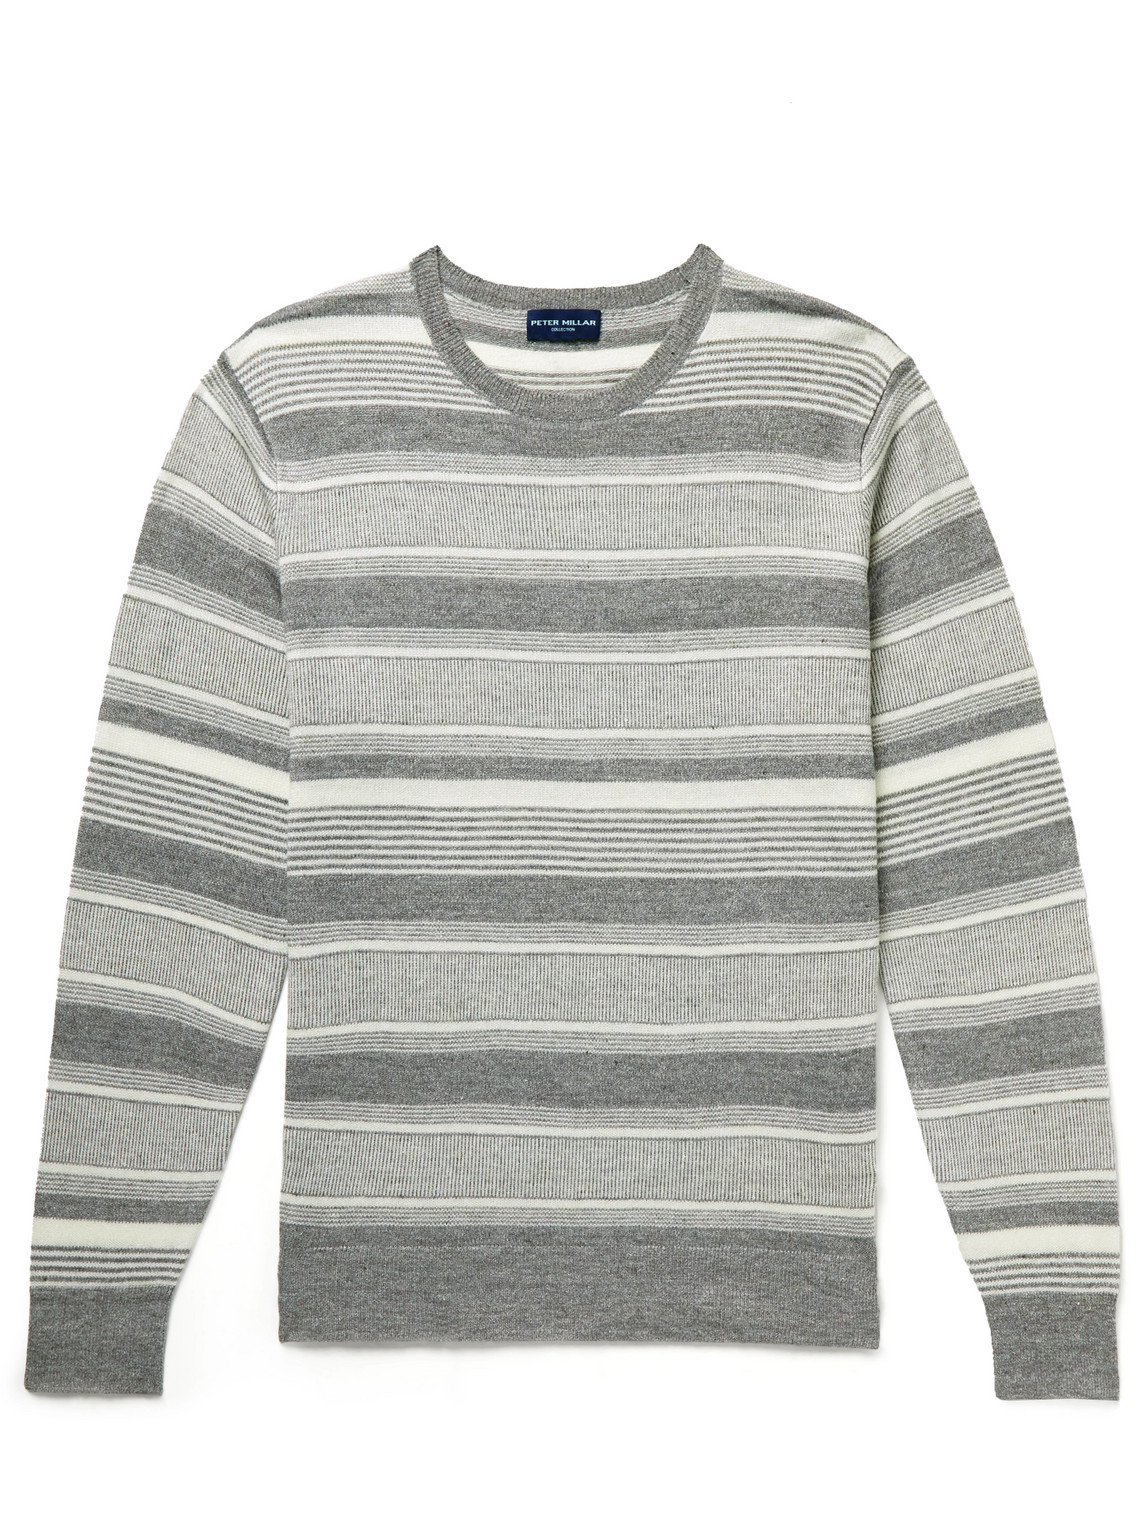 Keys Striped Linen and Merino Wool-Blend Sweater